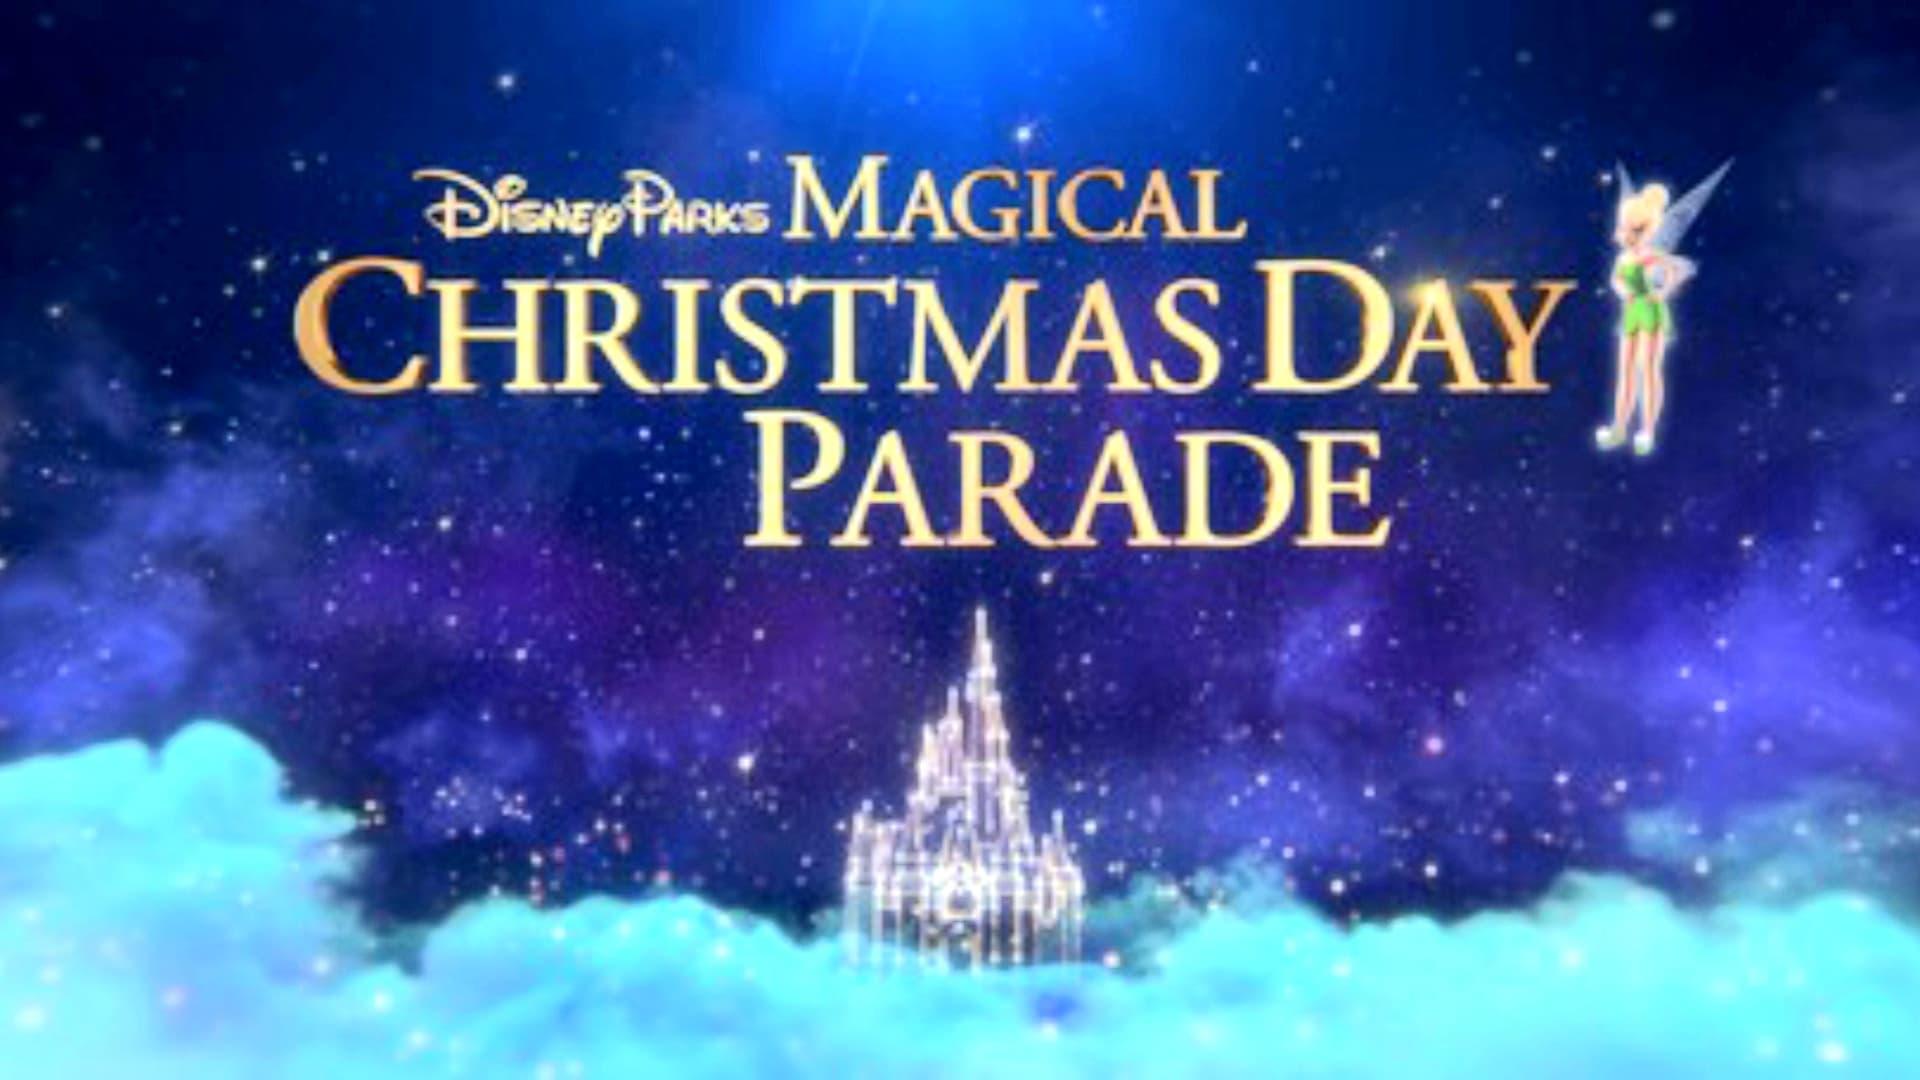 Disney Parks Magical Christmas Day Parade backdrop